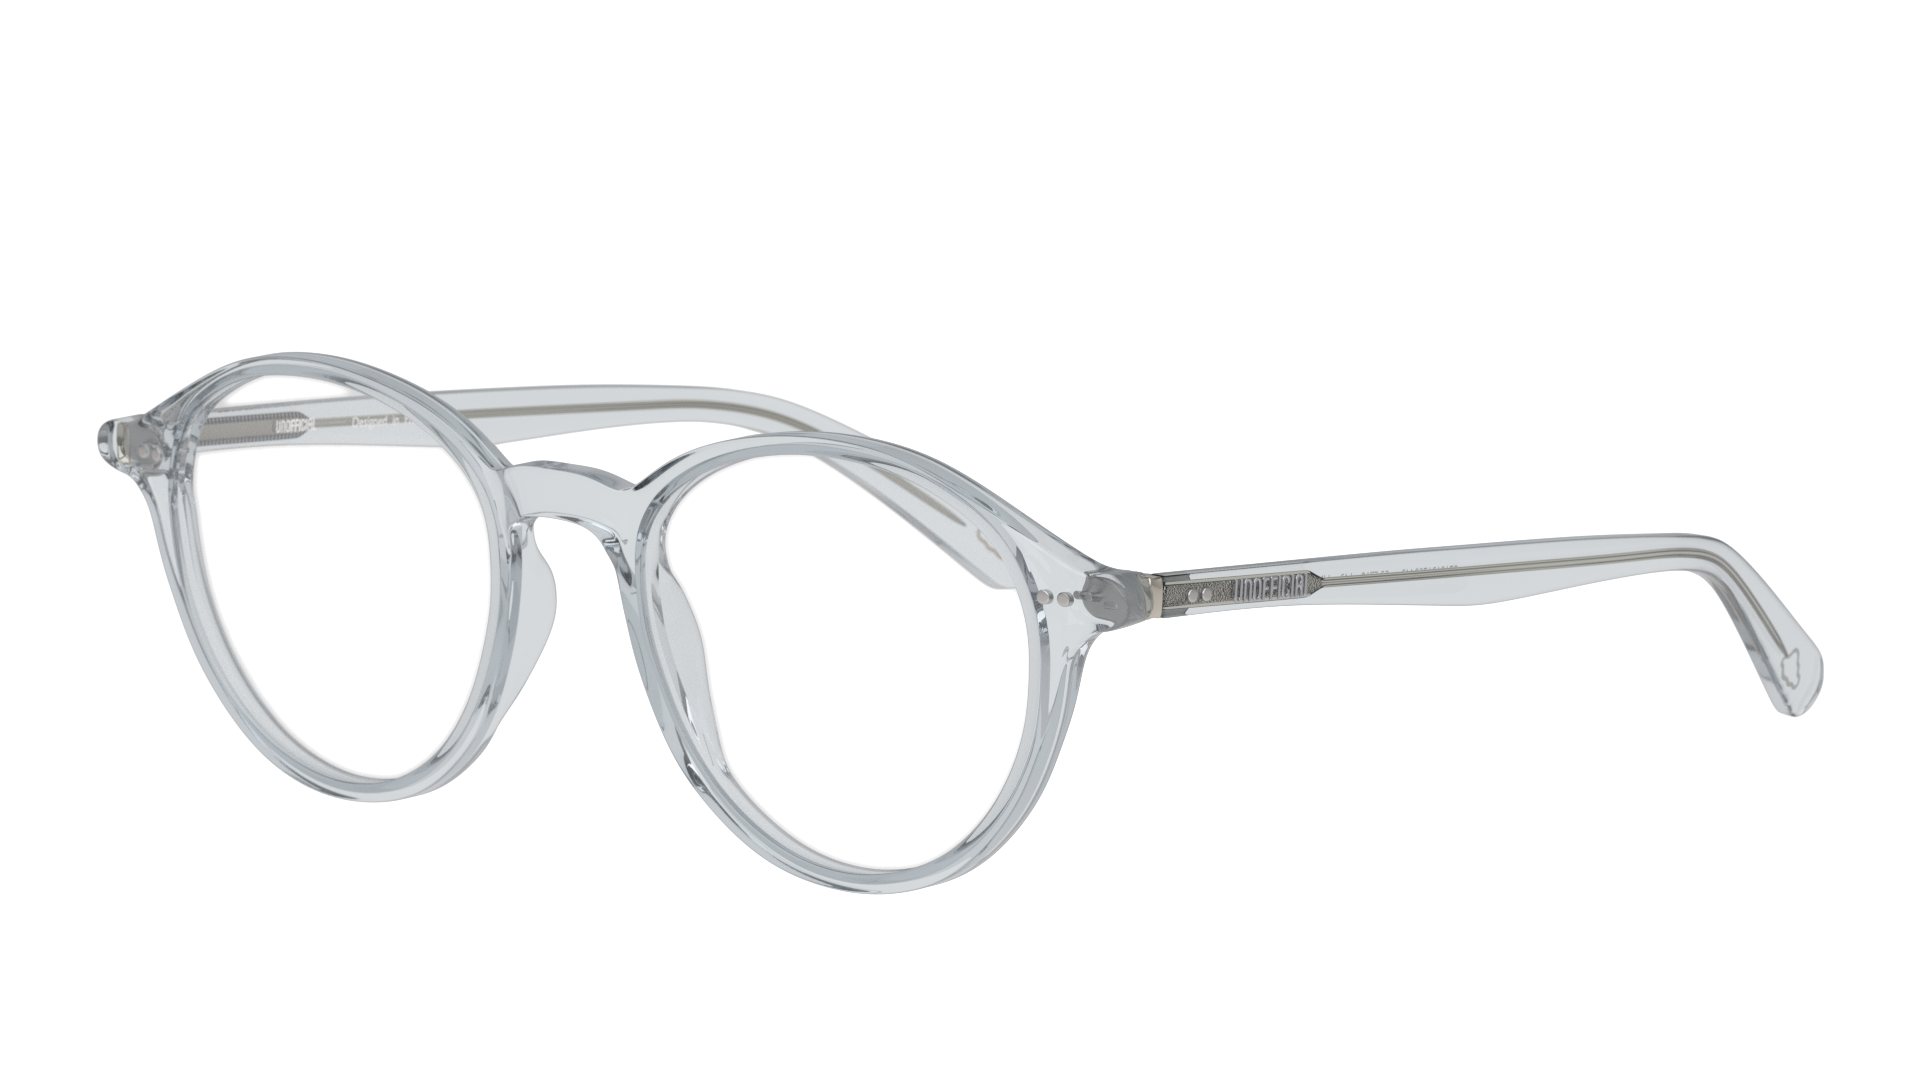 Angle_Left01 Unofficial UNOM0185 Glasses Transparent / Transparent, Grey